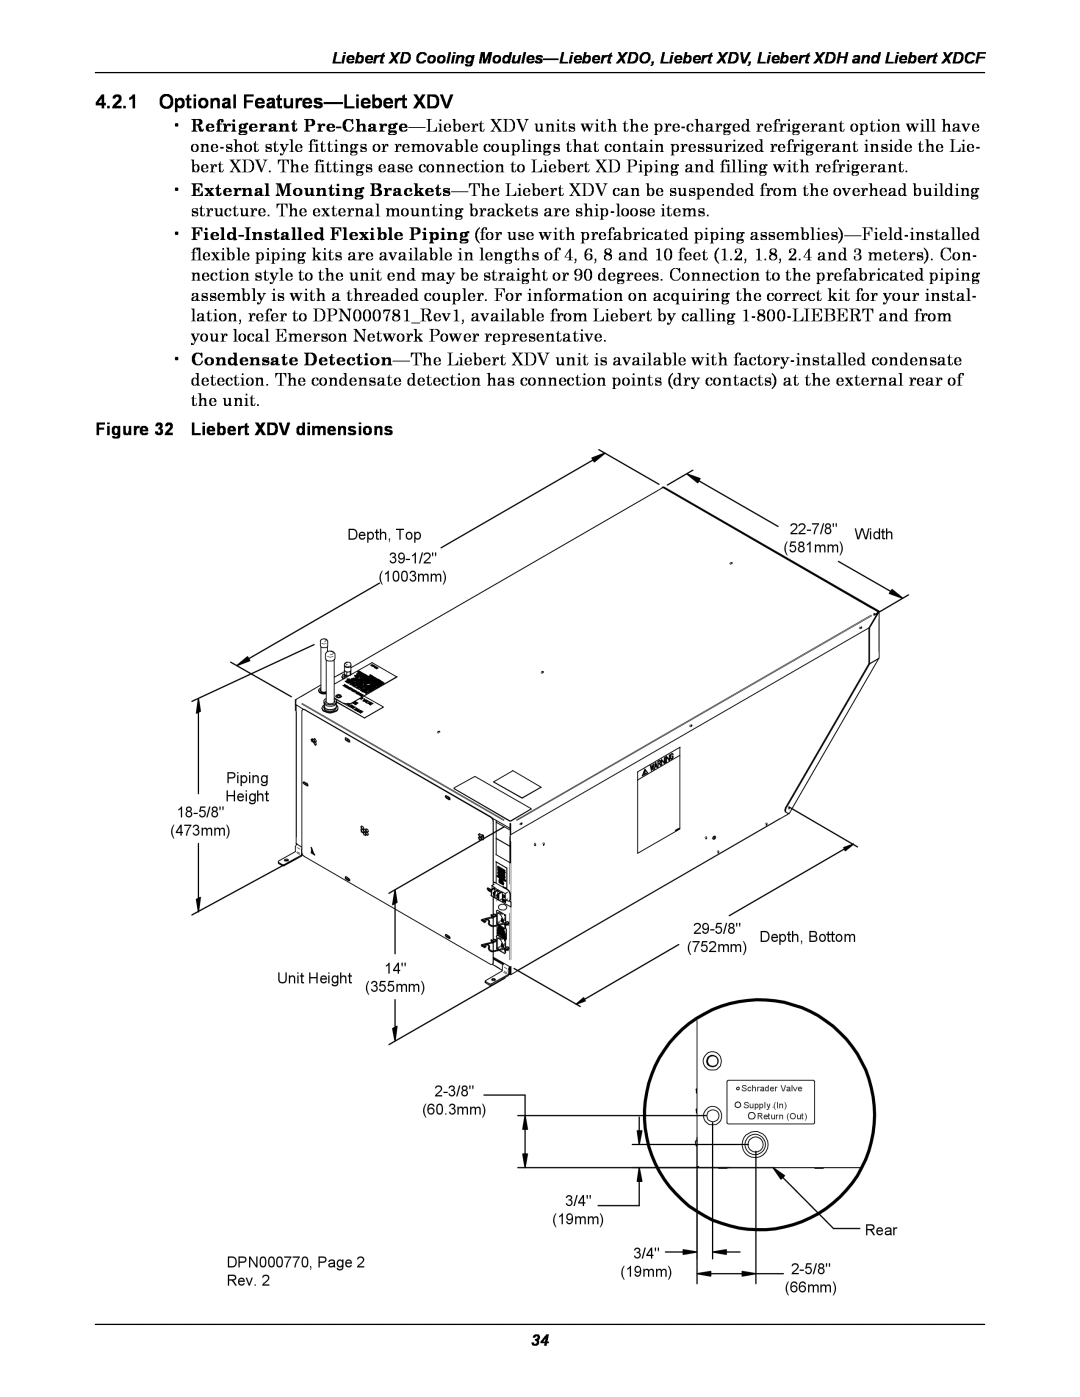 Emerson Xtreme Density manual Optional Features-Liebert XDV, Liebert XDV dimensions 